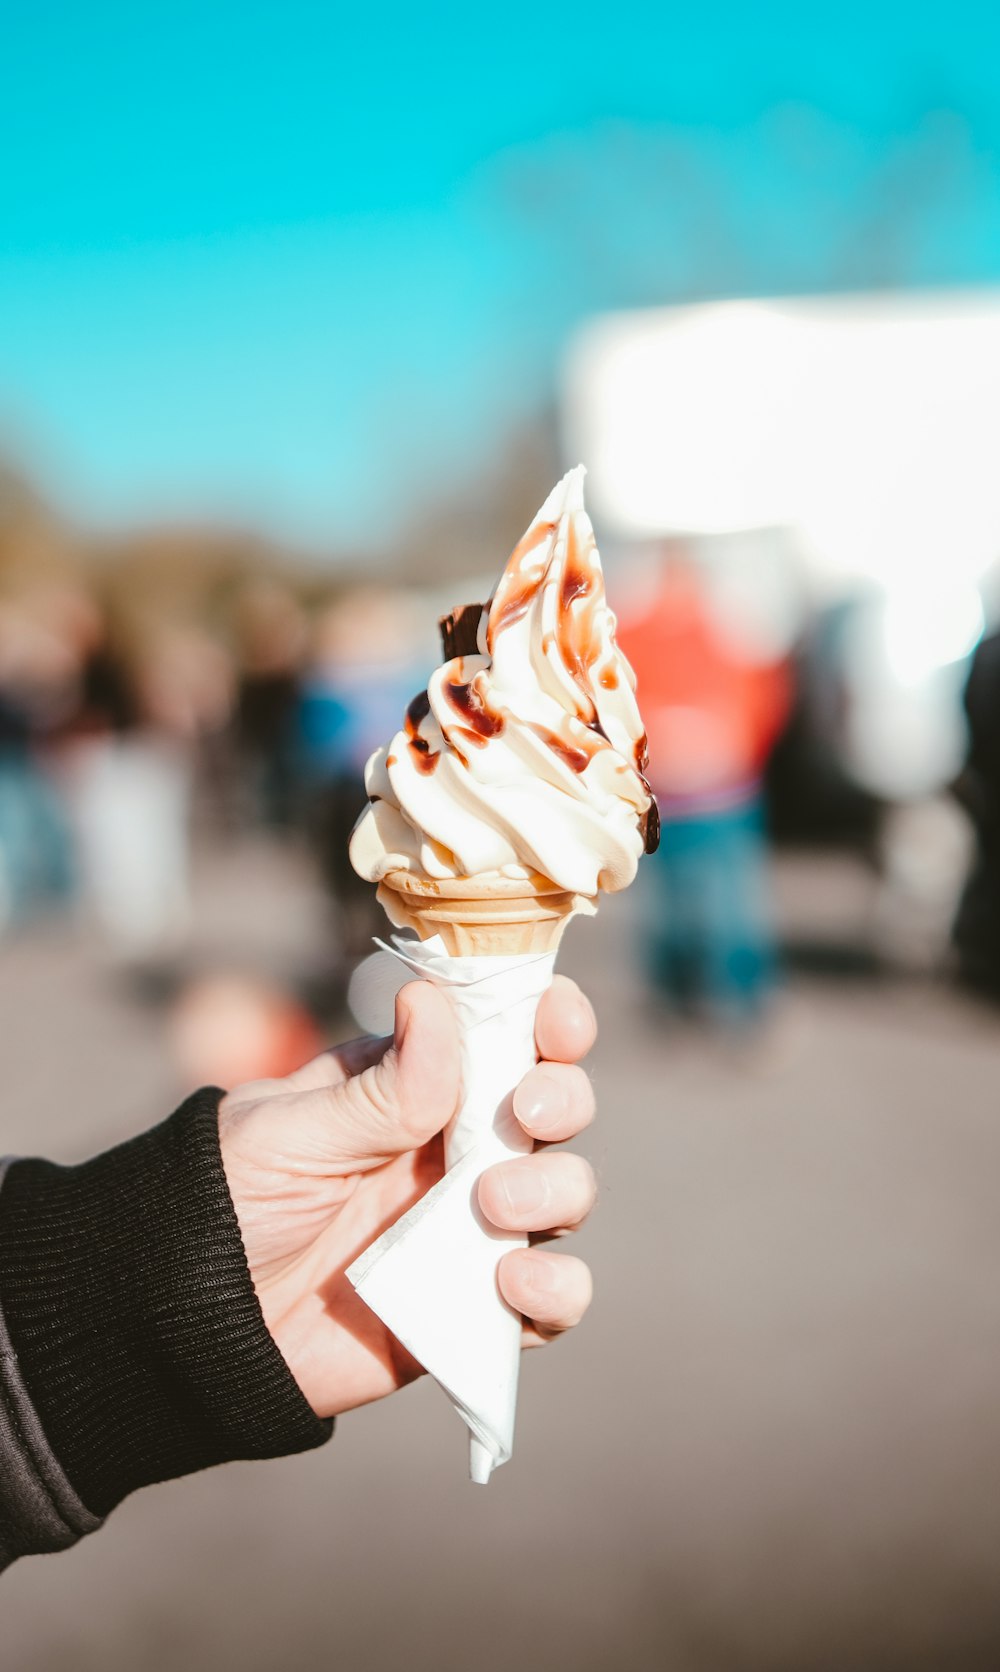 Una persona tiene in mano un cono gelato